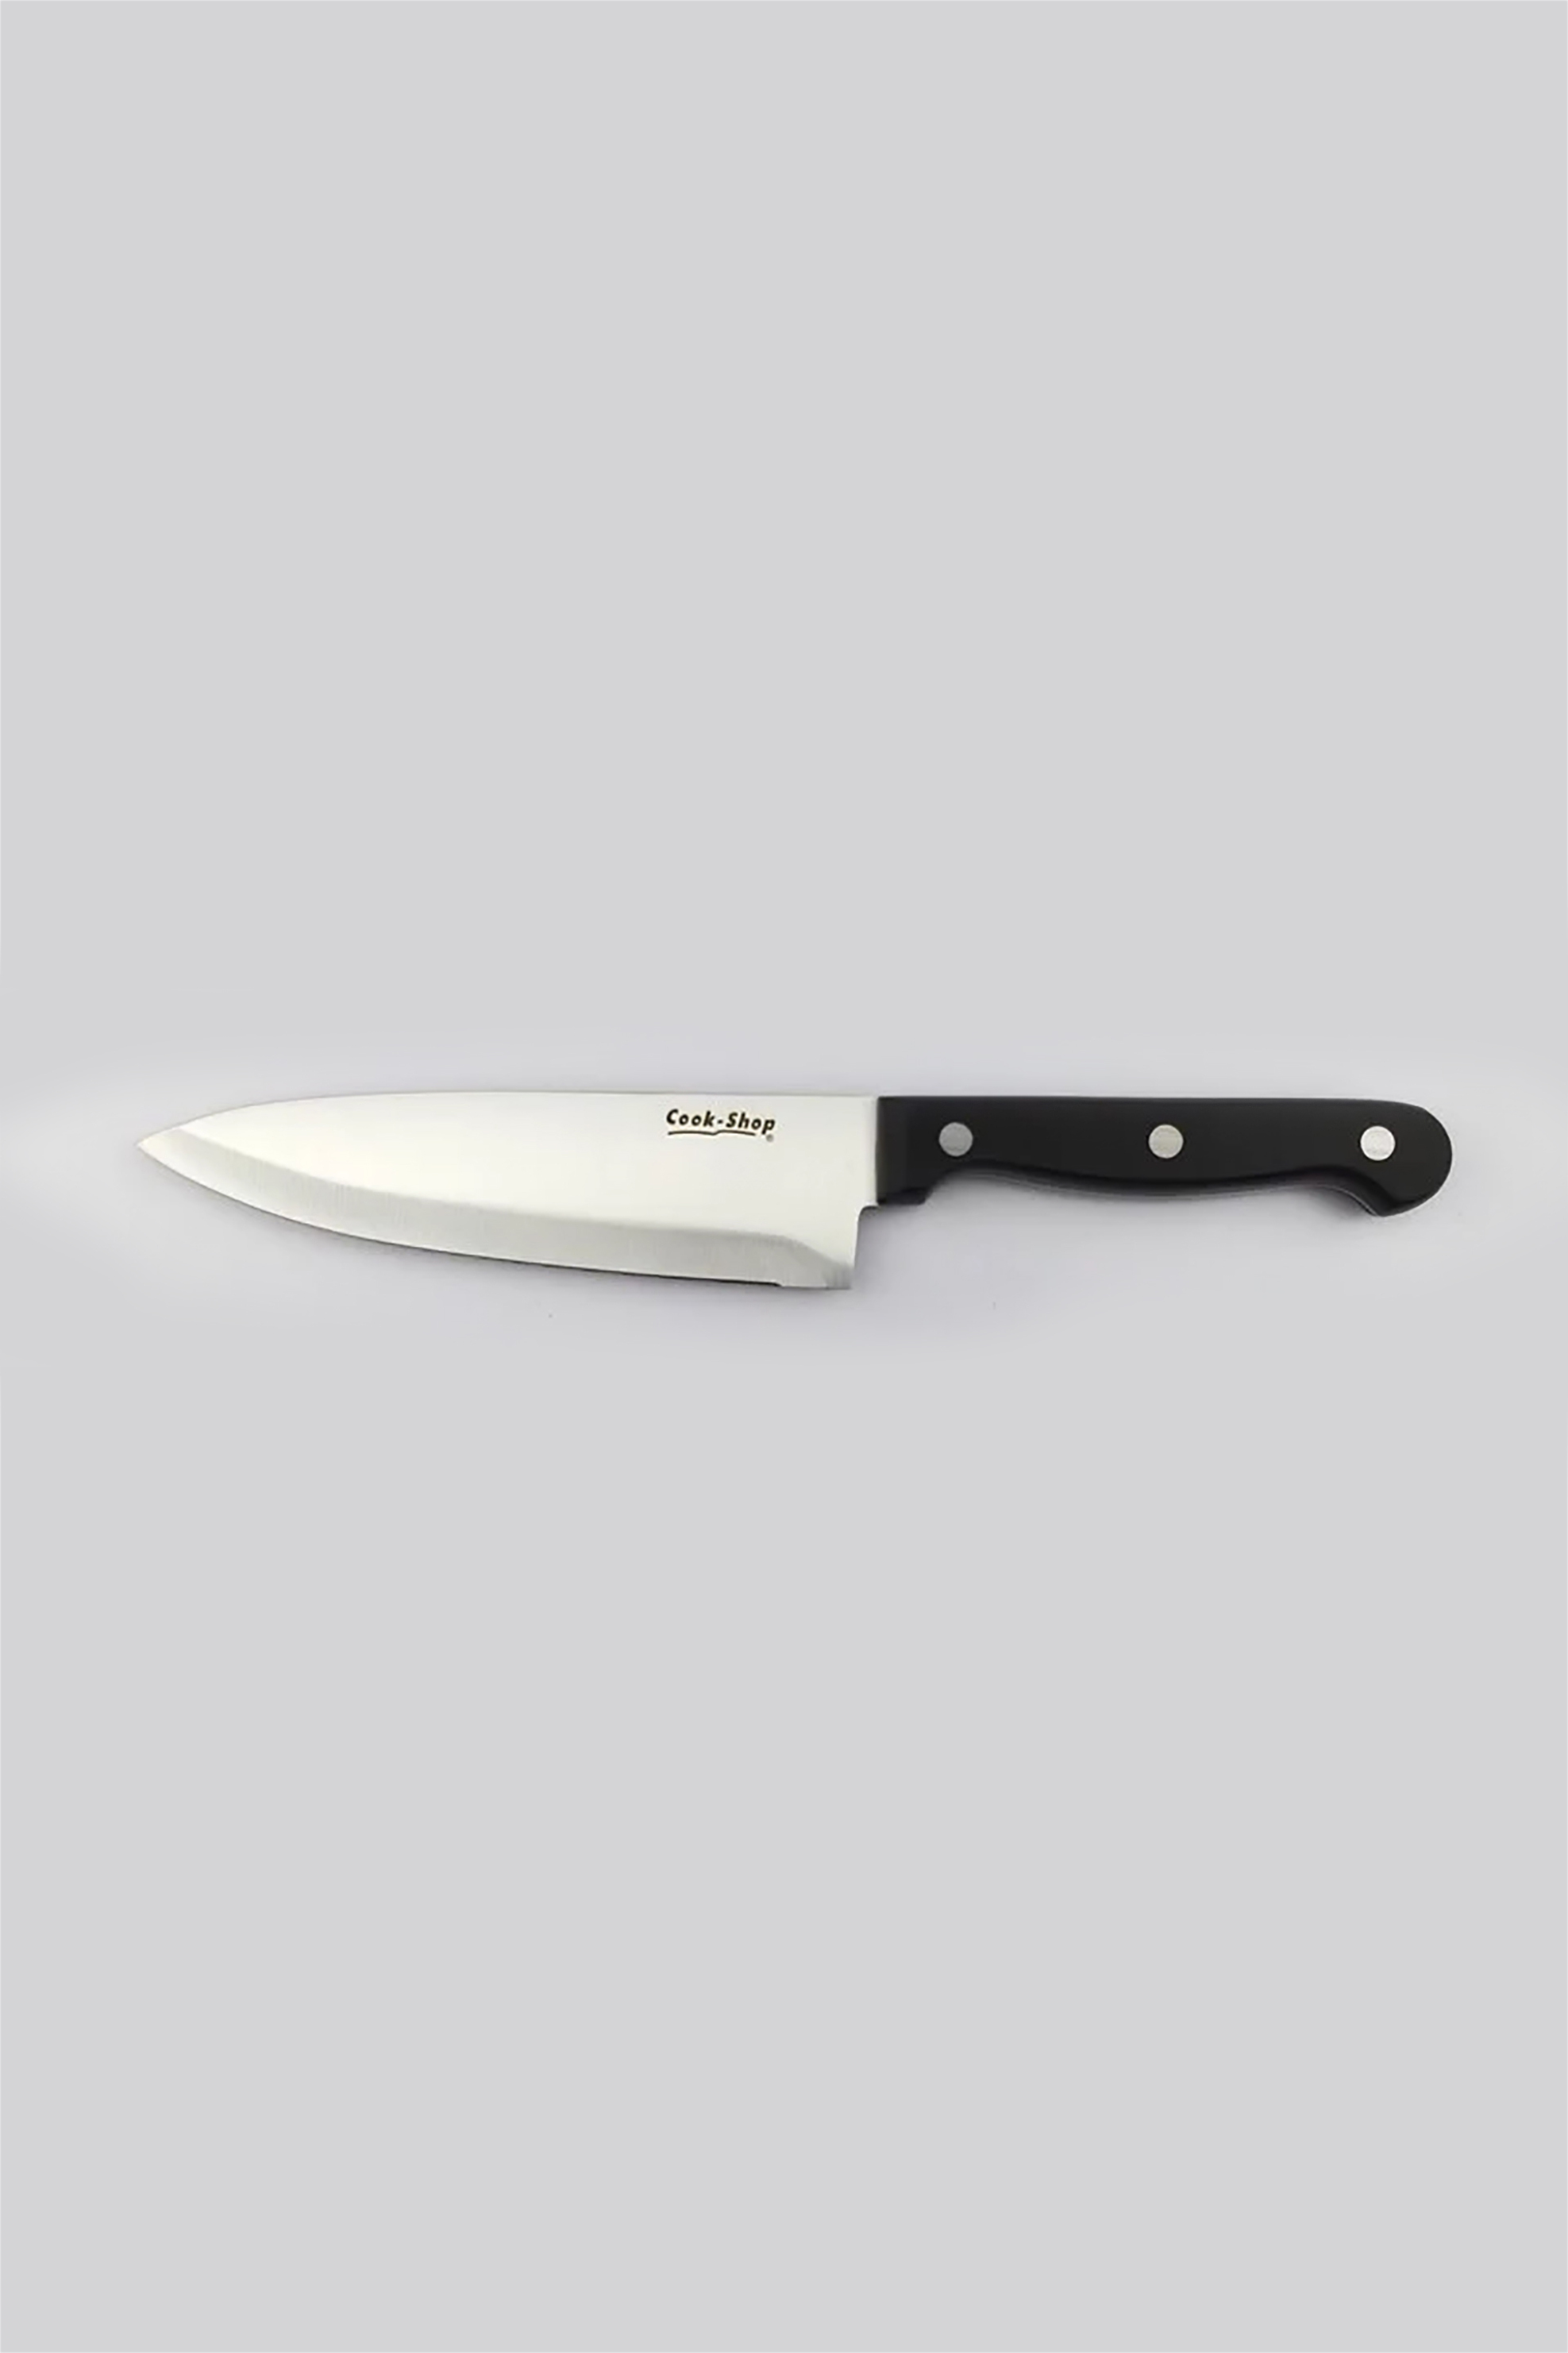 Cook-Shop μαχαίρι του σεφ με ανοξείδωτη λεπίδα 16 cm - SB-001P/CP2-0